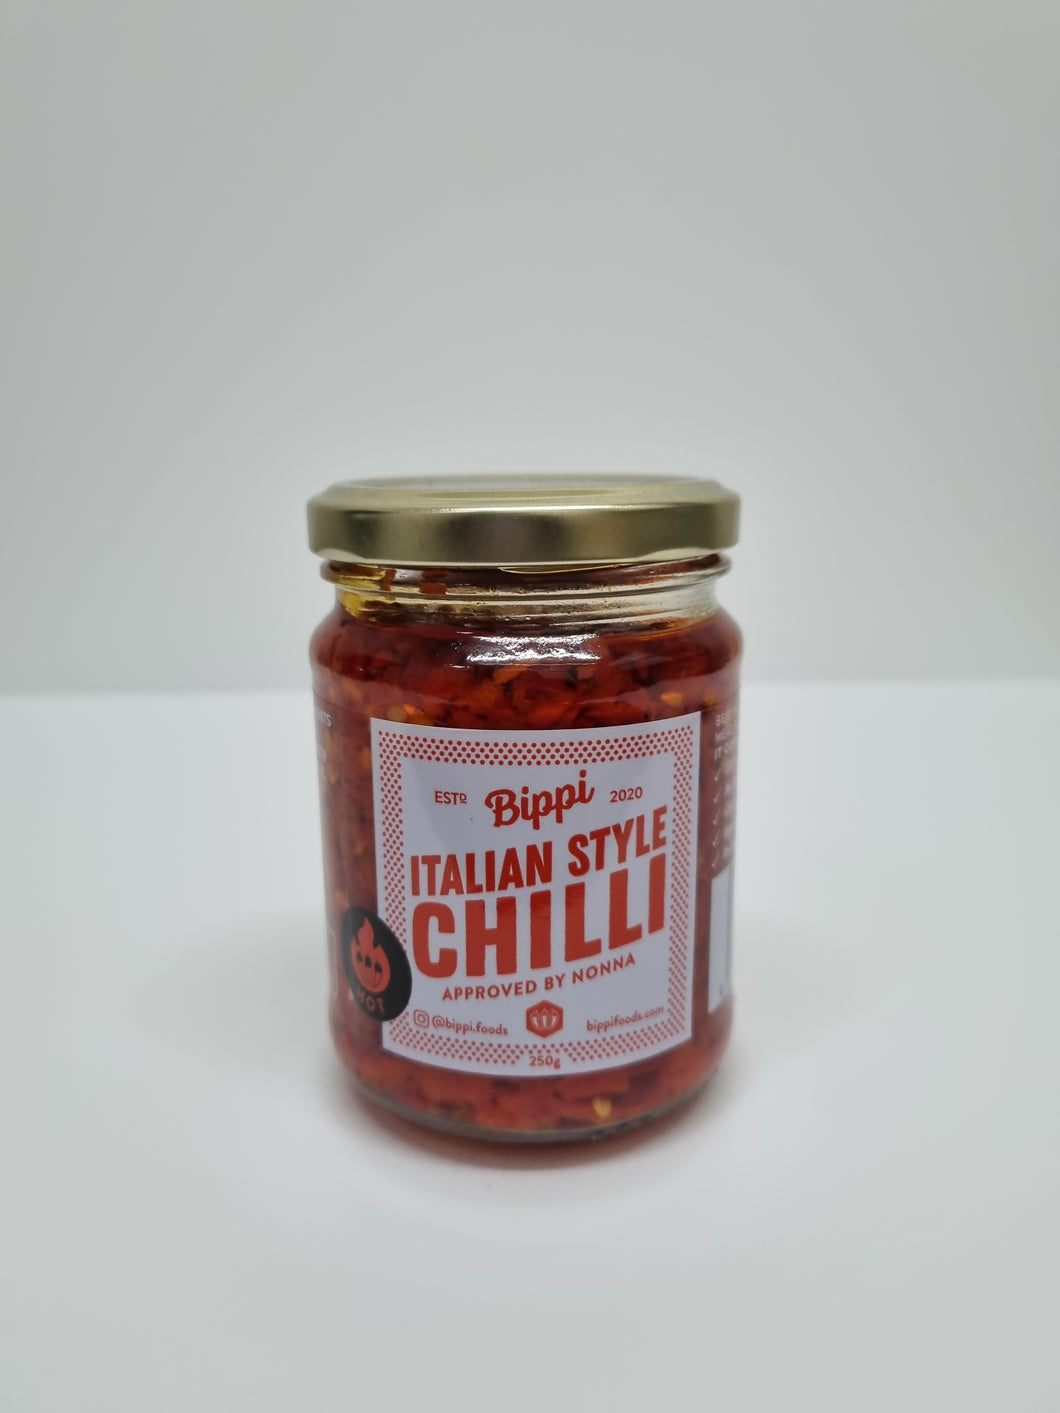 Bippi (Italian style chilli)